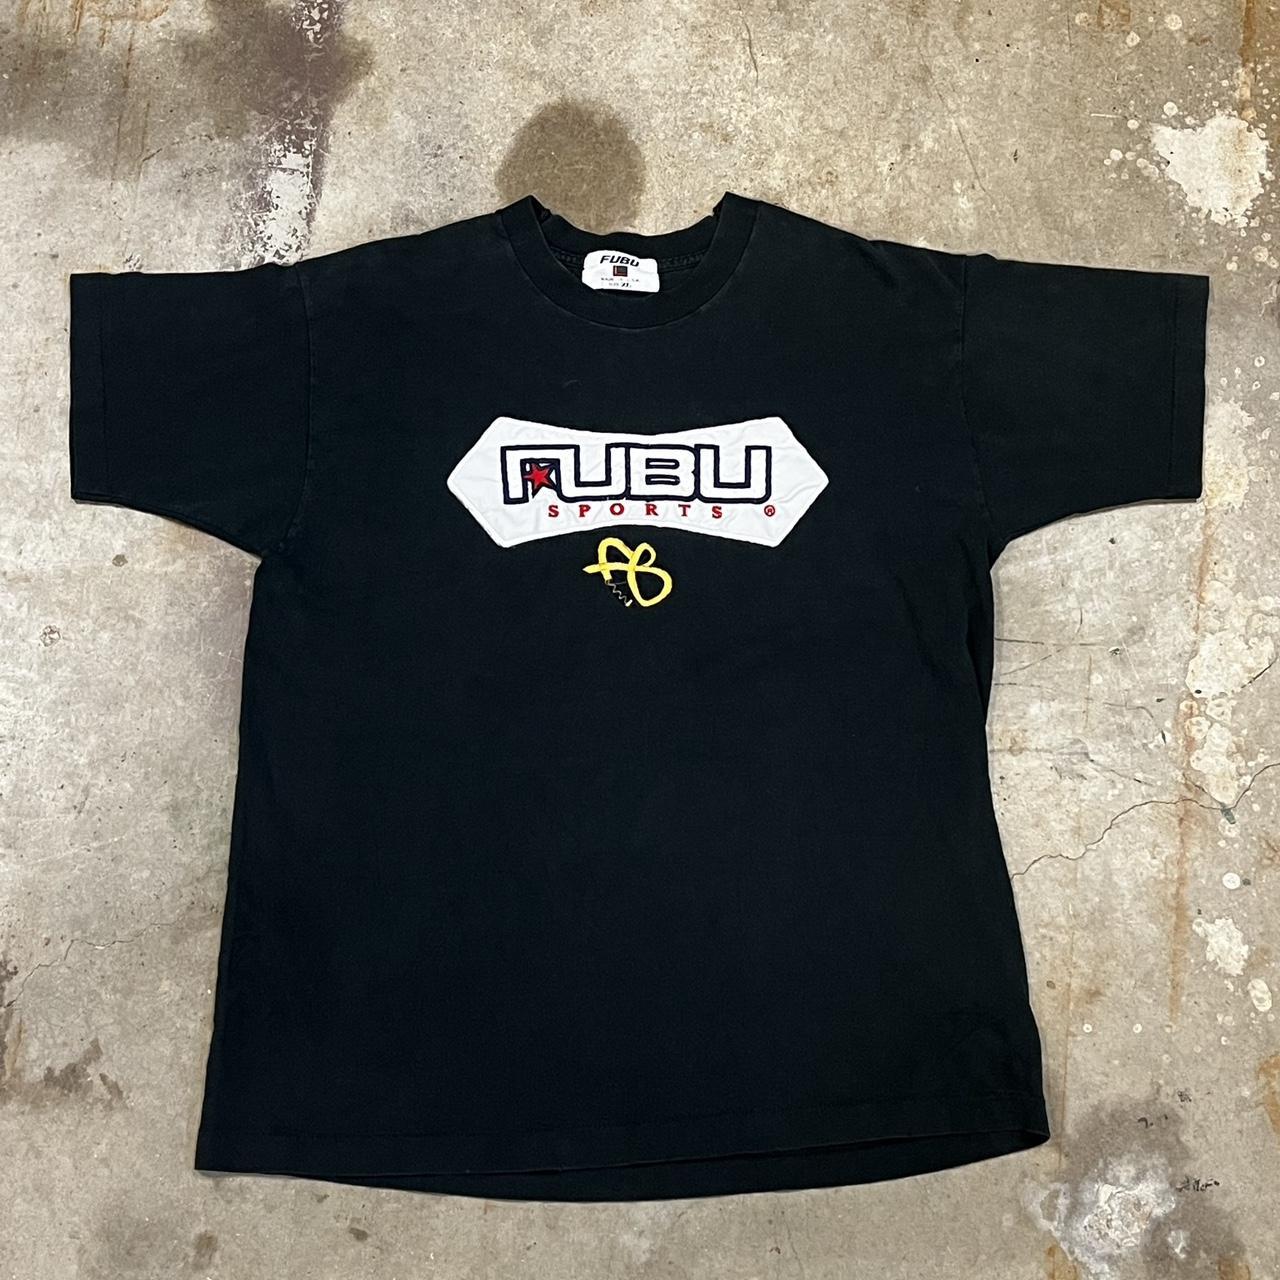 FUBU Men's Black and White T-shirt | Depop